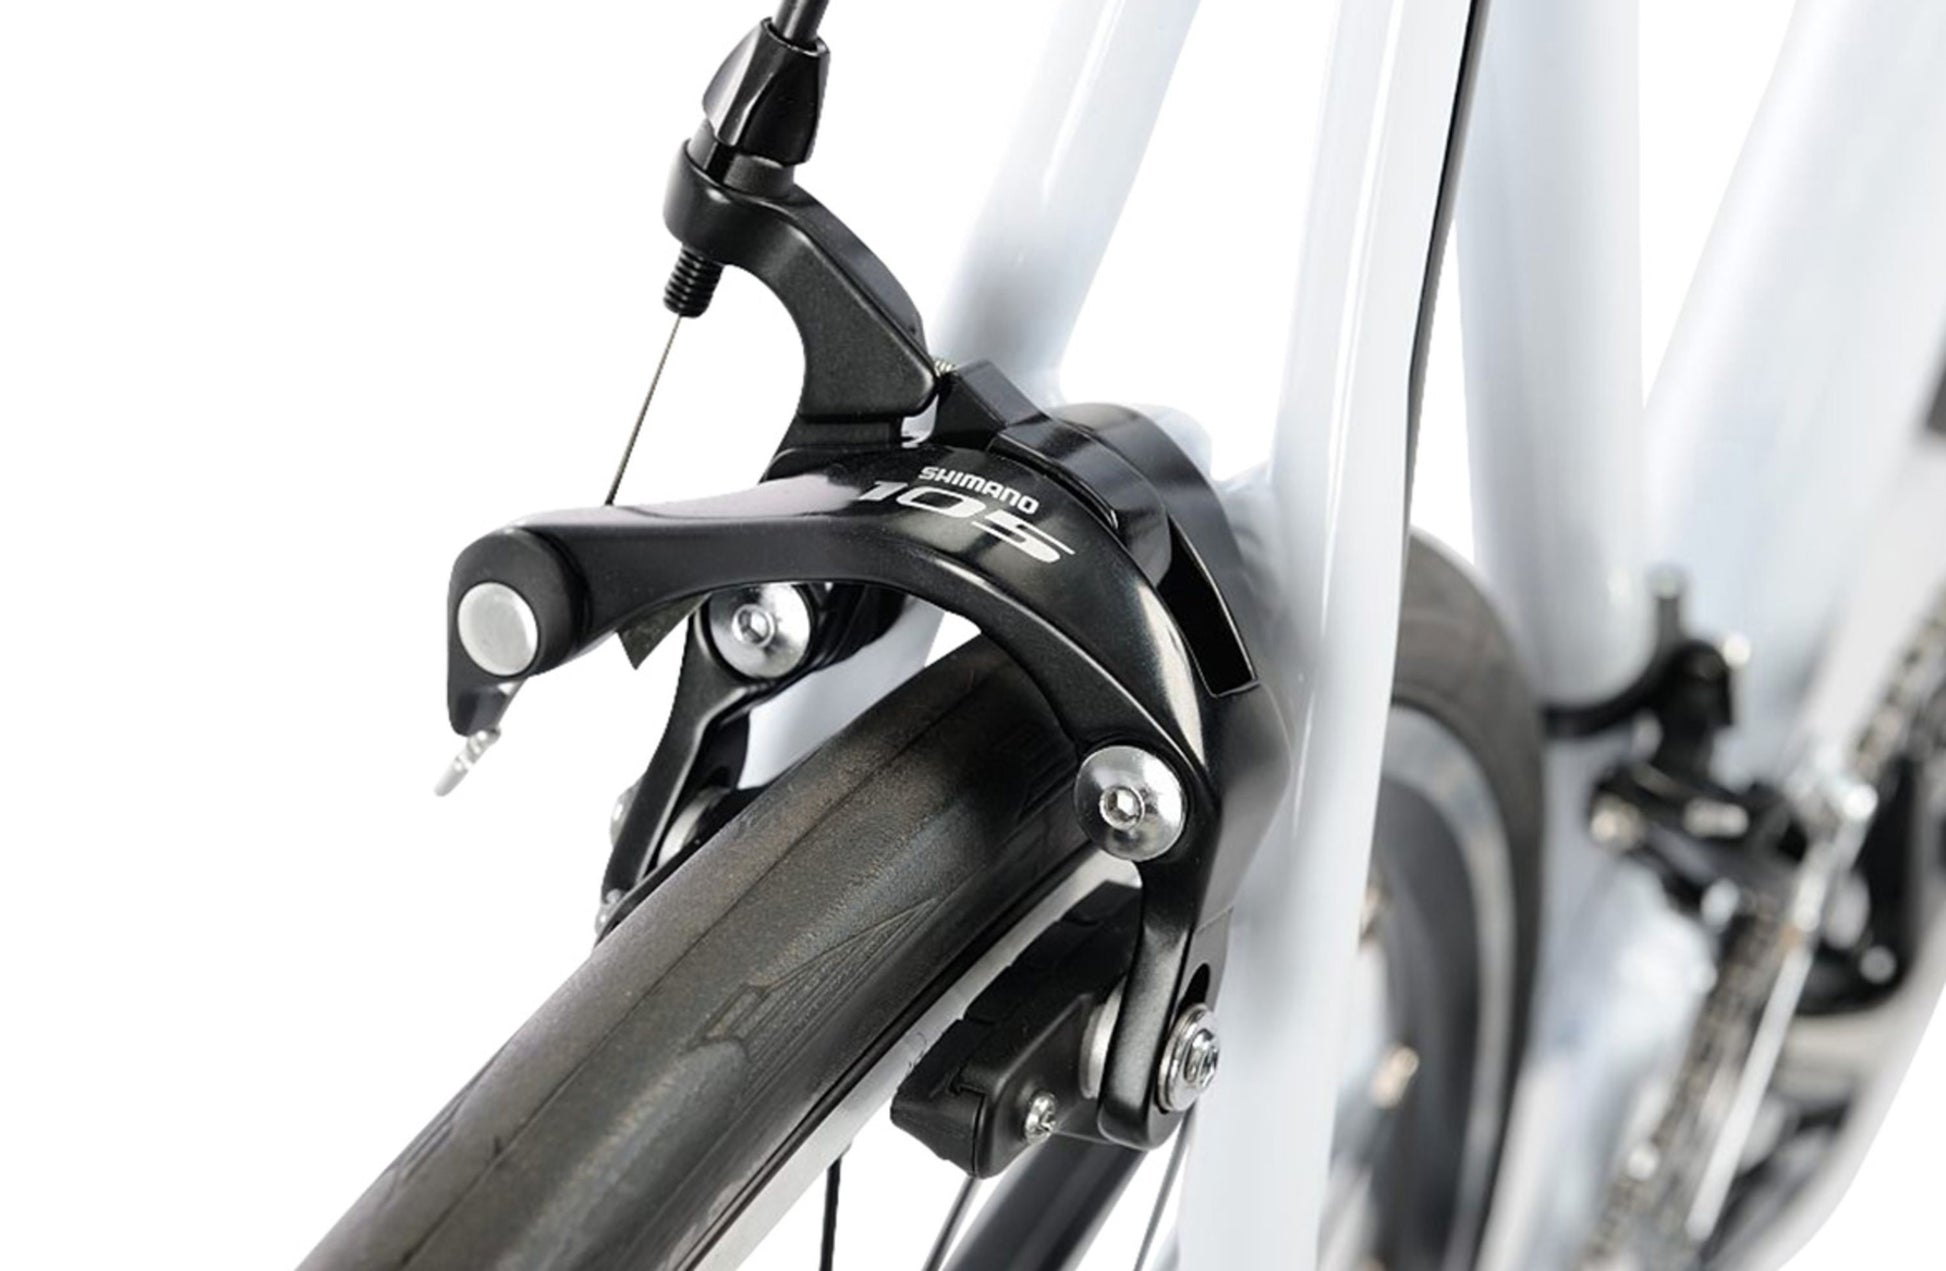 Falco Elite Road Bike in White showing rear dual pivot caliper brakes from Reid Cycles Australia